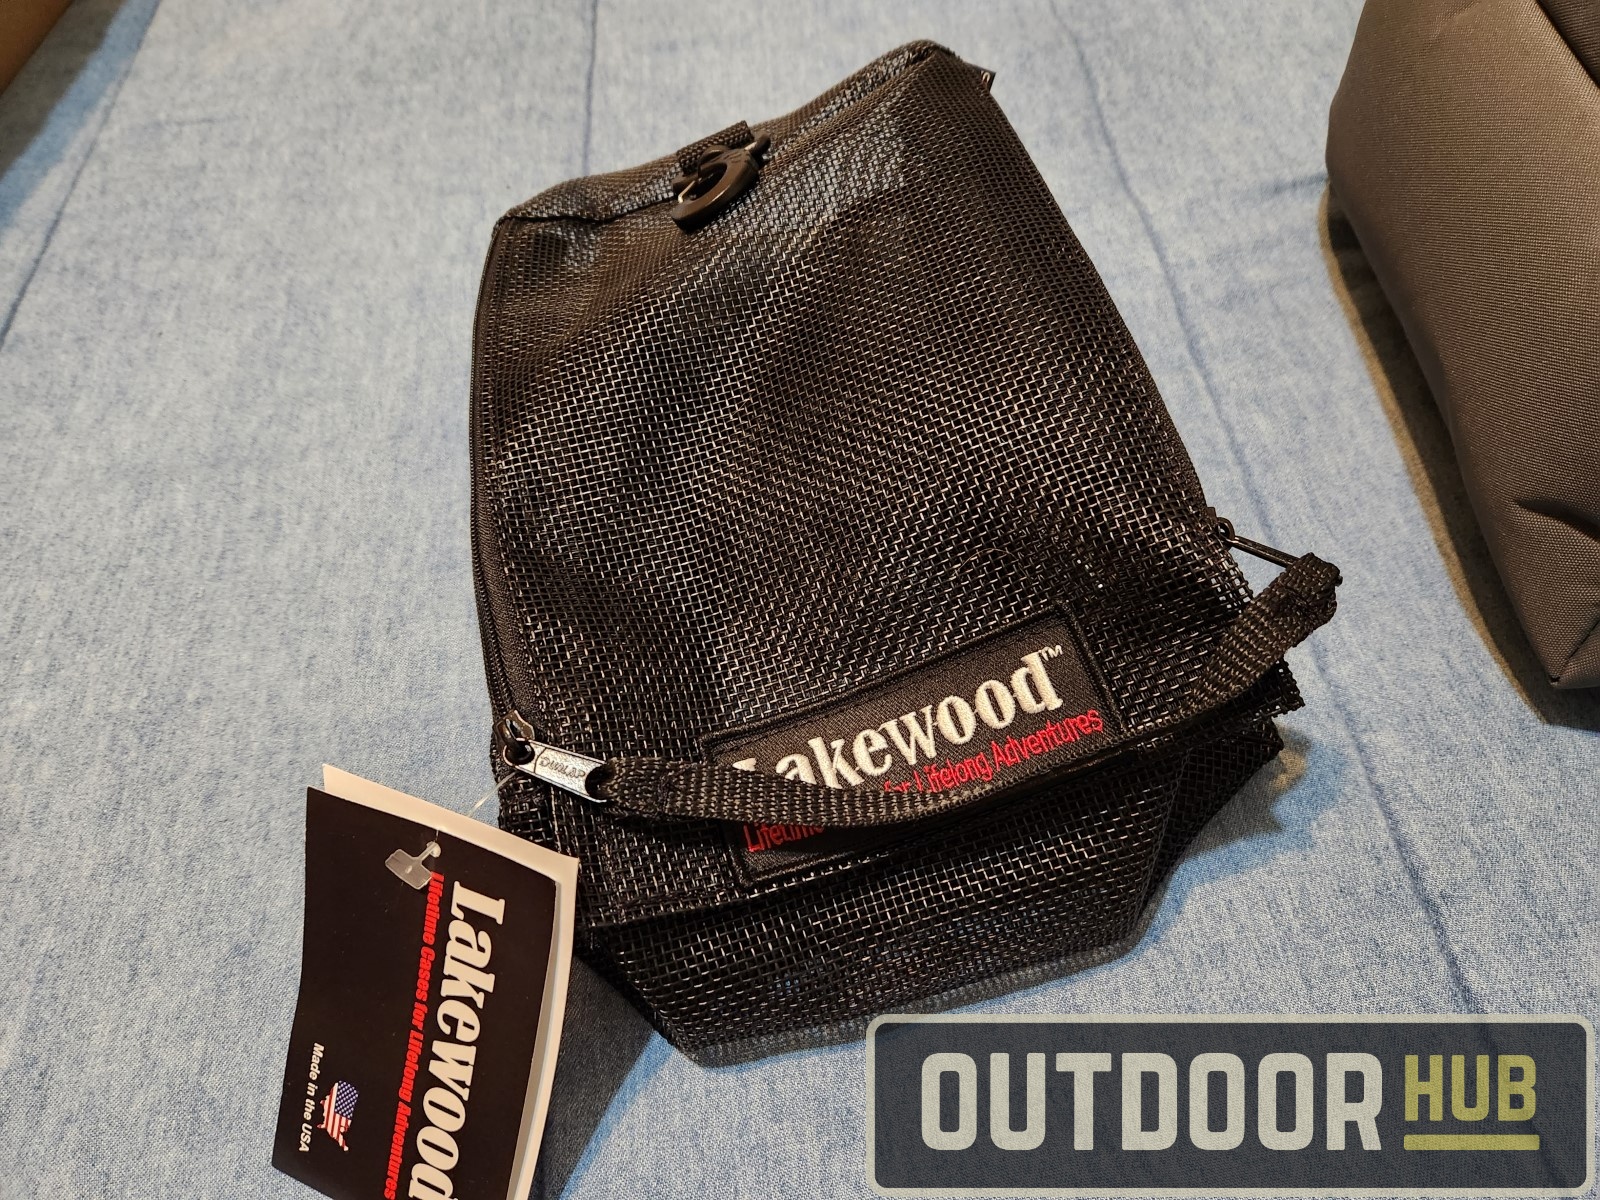 OHub Review – Lakewood Mini Sidekick Tackle Box